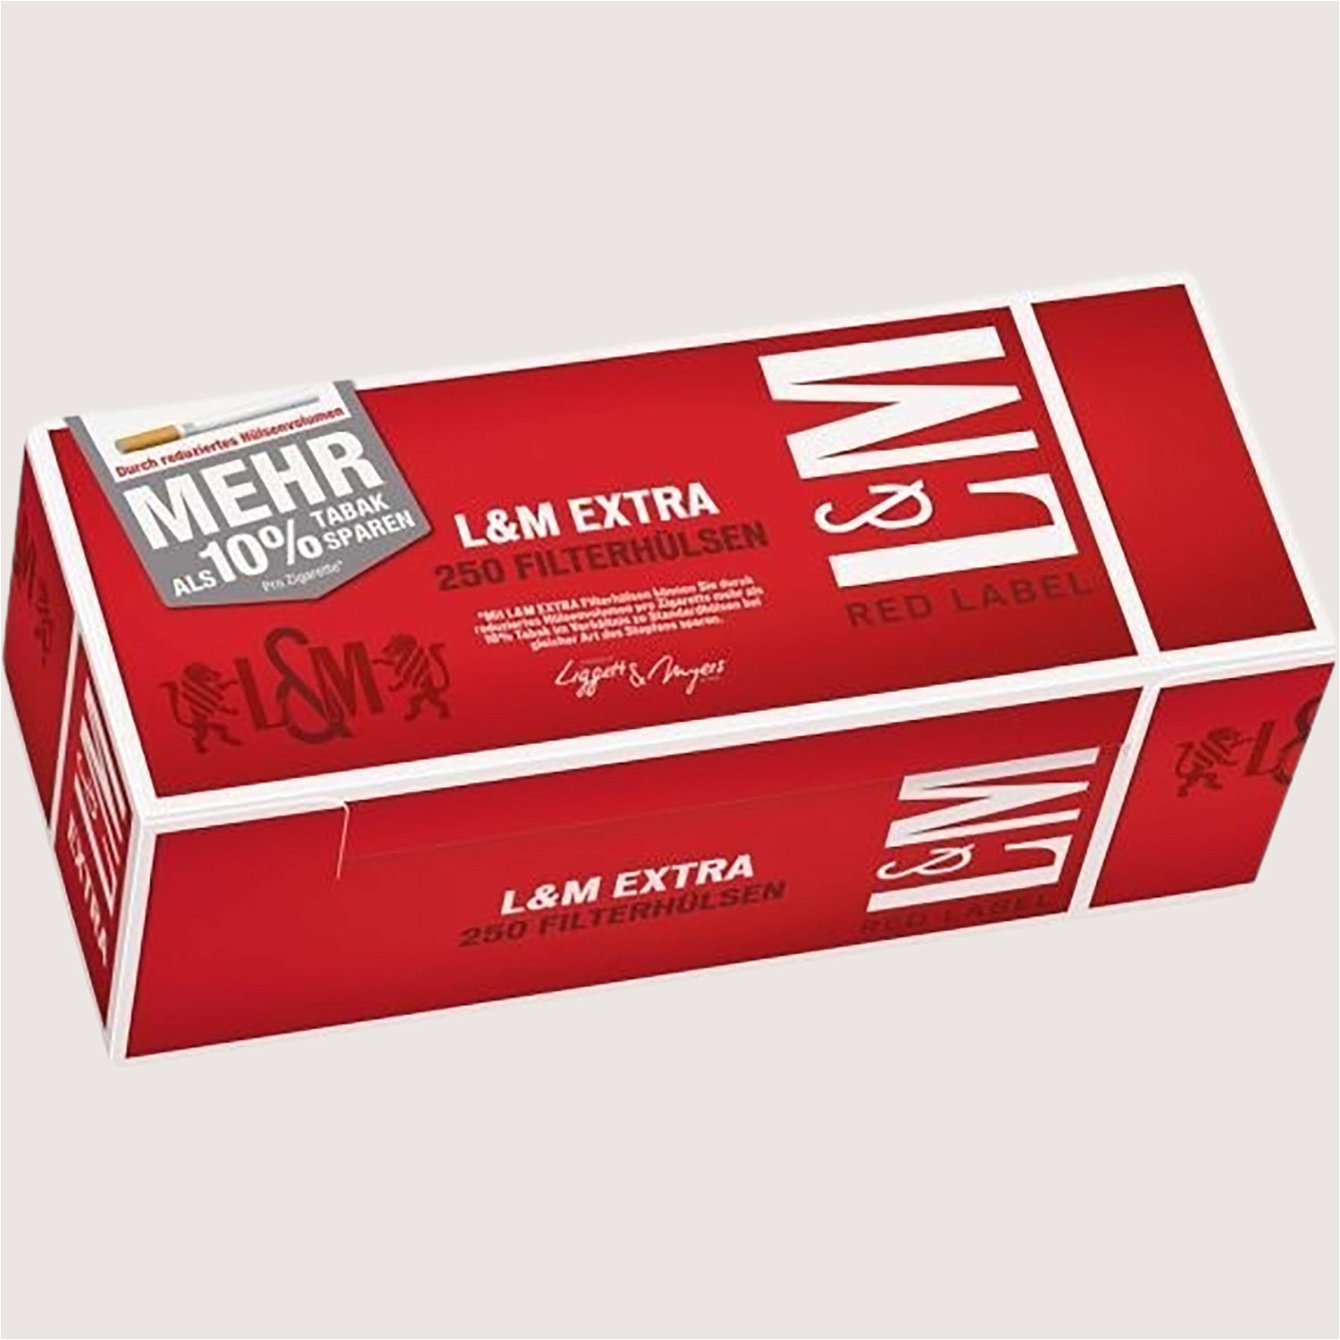 L&M Extra Red Label 250 Hülsen